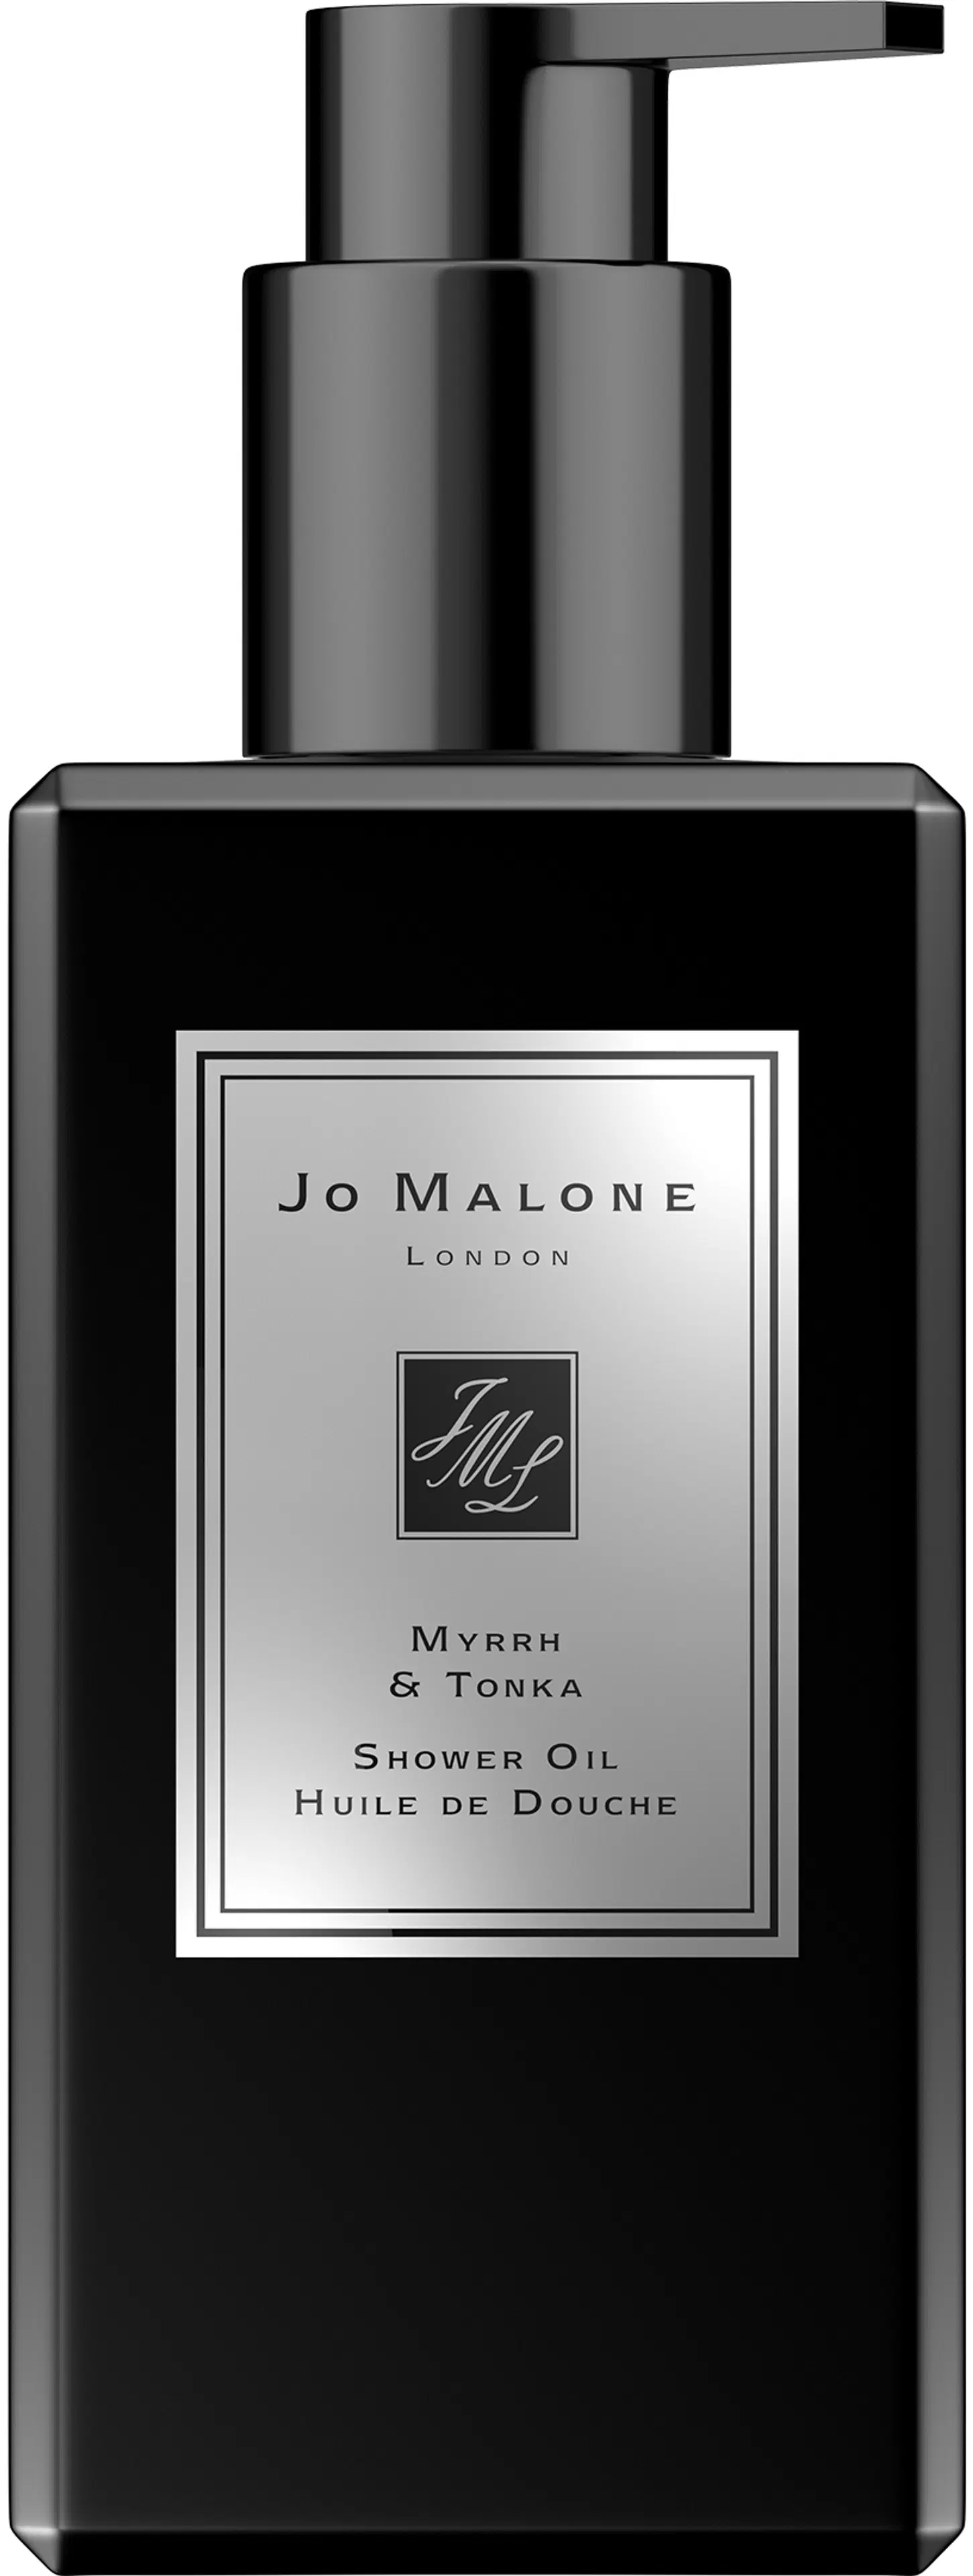 Jo Malone London Myrrh&Tonka Shower Oil suihkuöljy 250ml